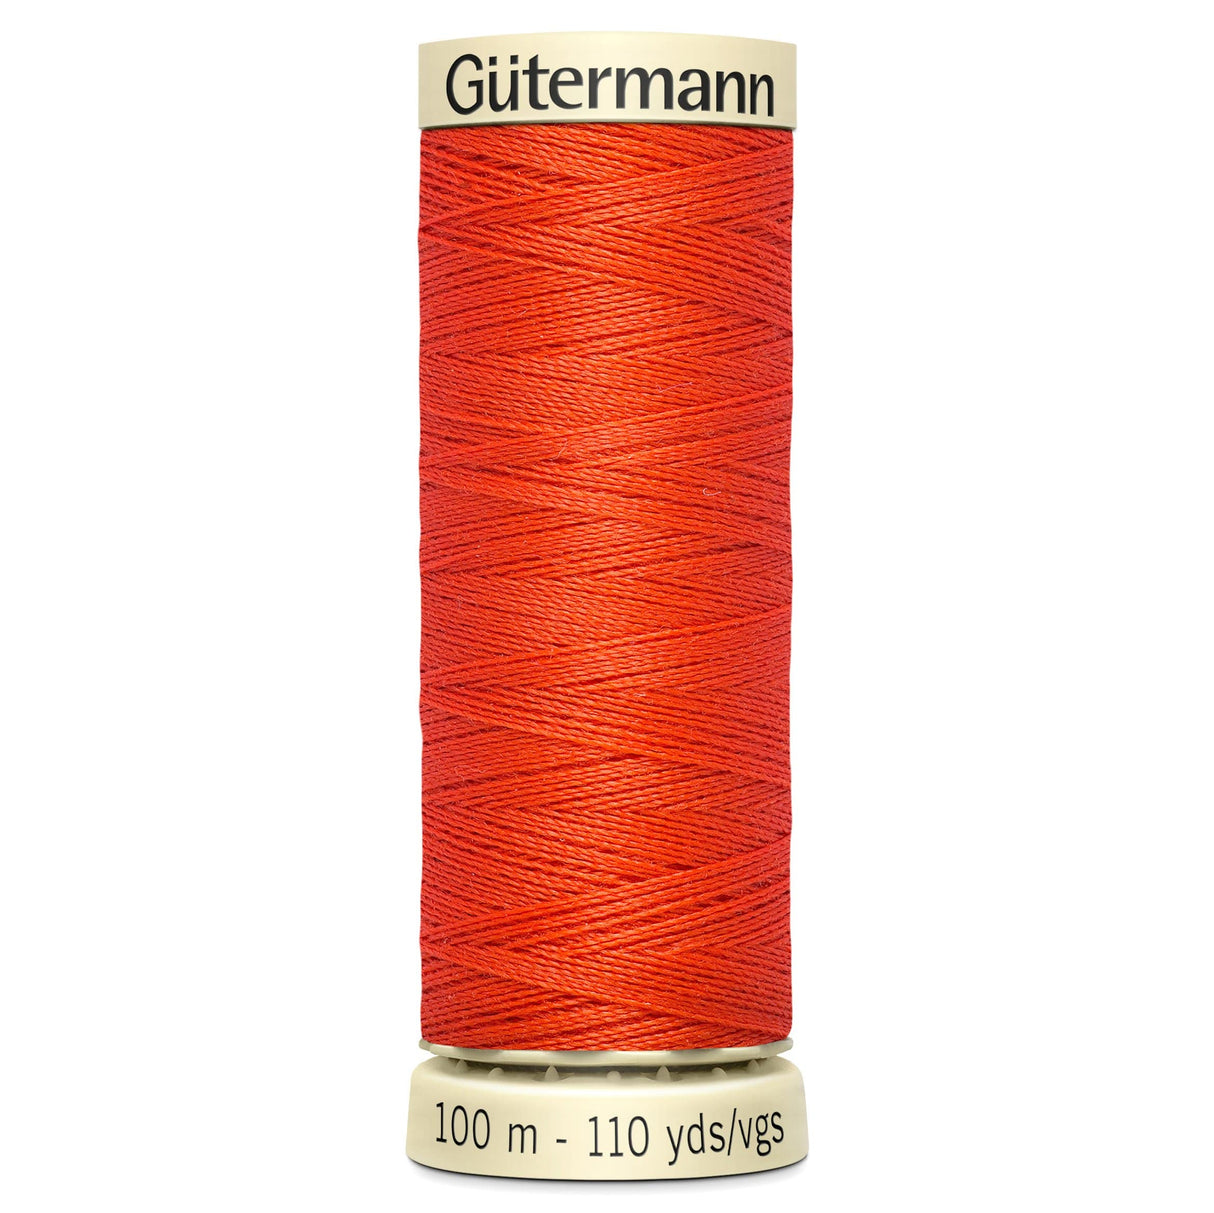 Groves Haberdashery 155 Gutermann Thread Sewing Cotton 100 m Black to Pink